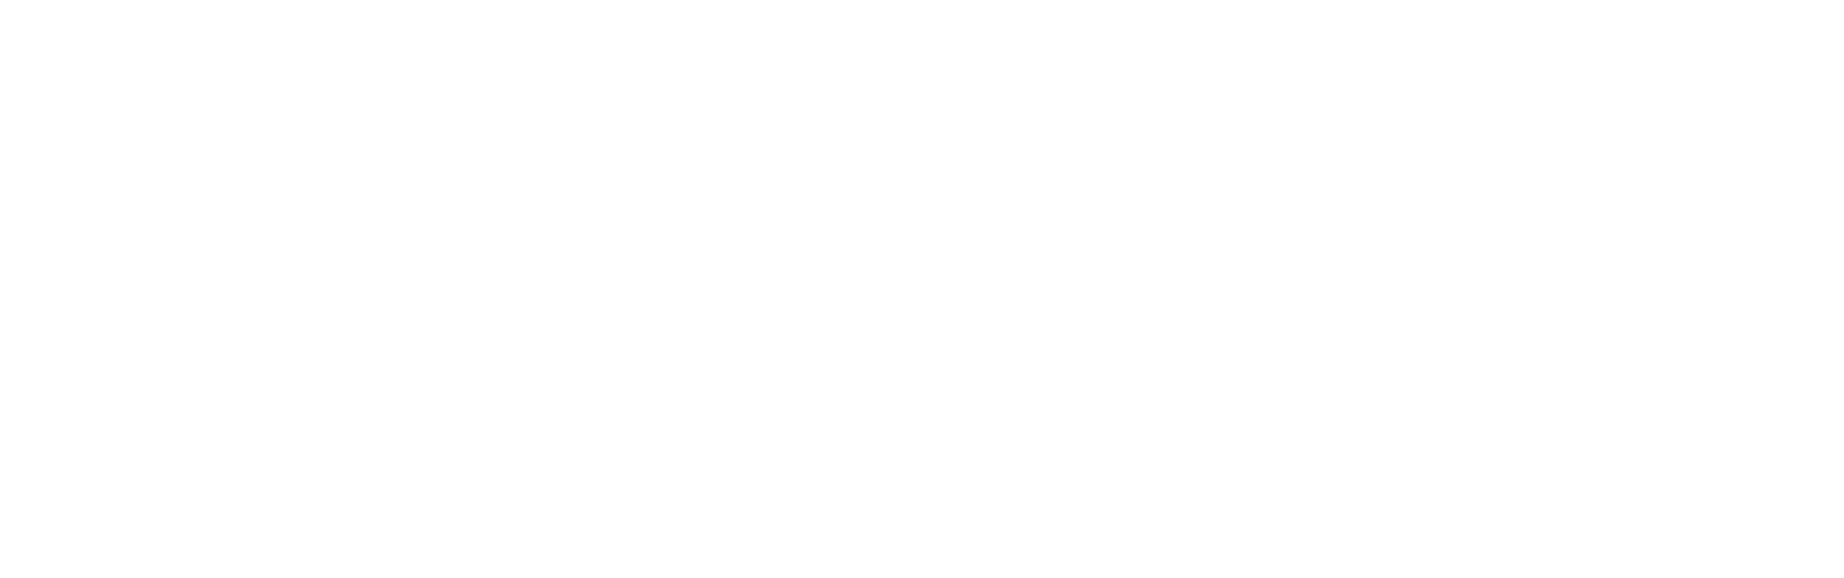 Felware LLC